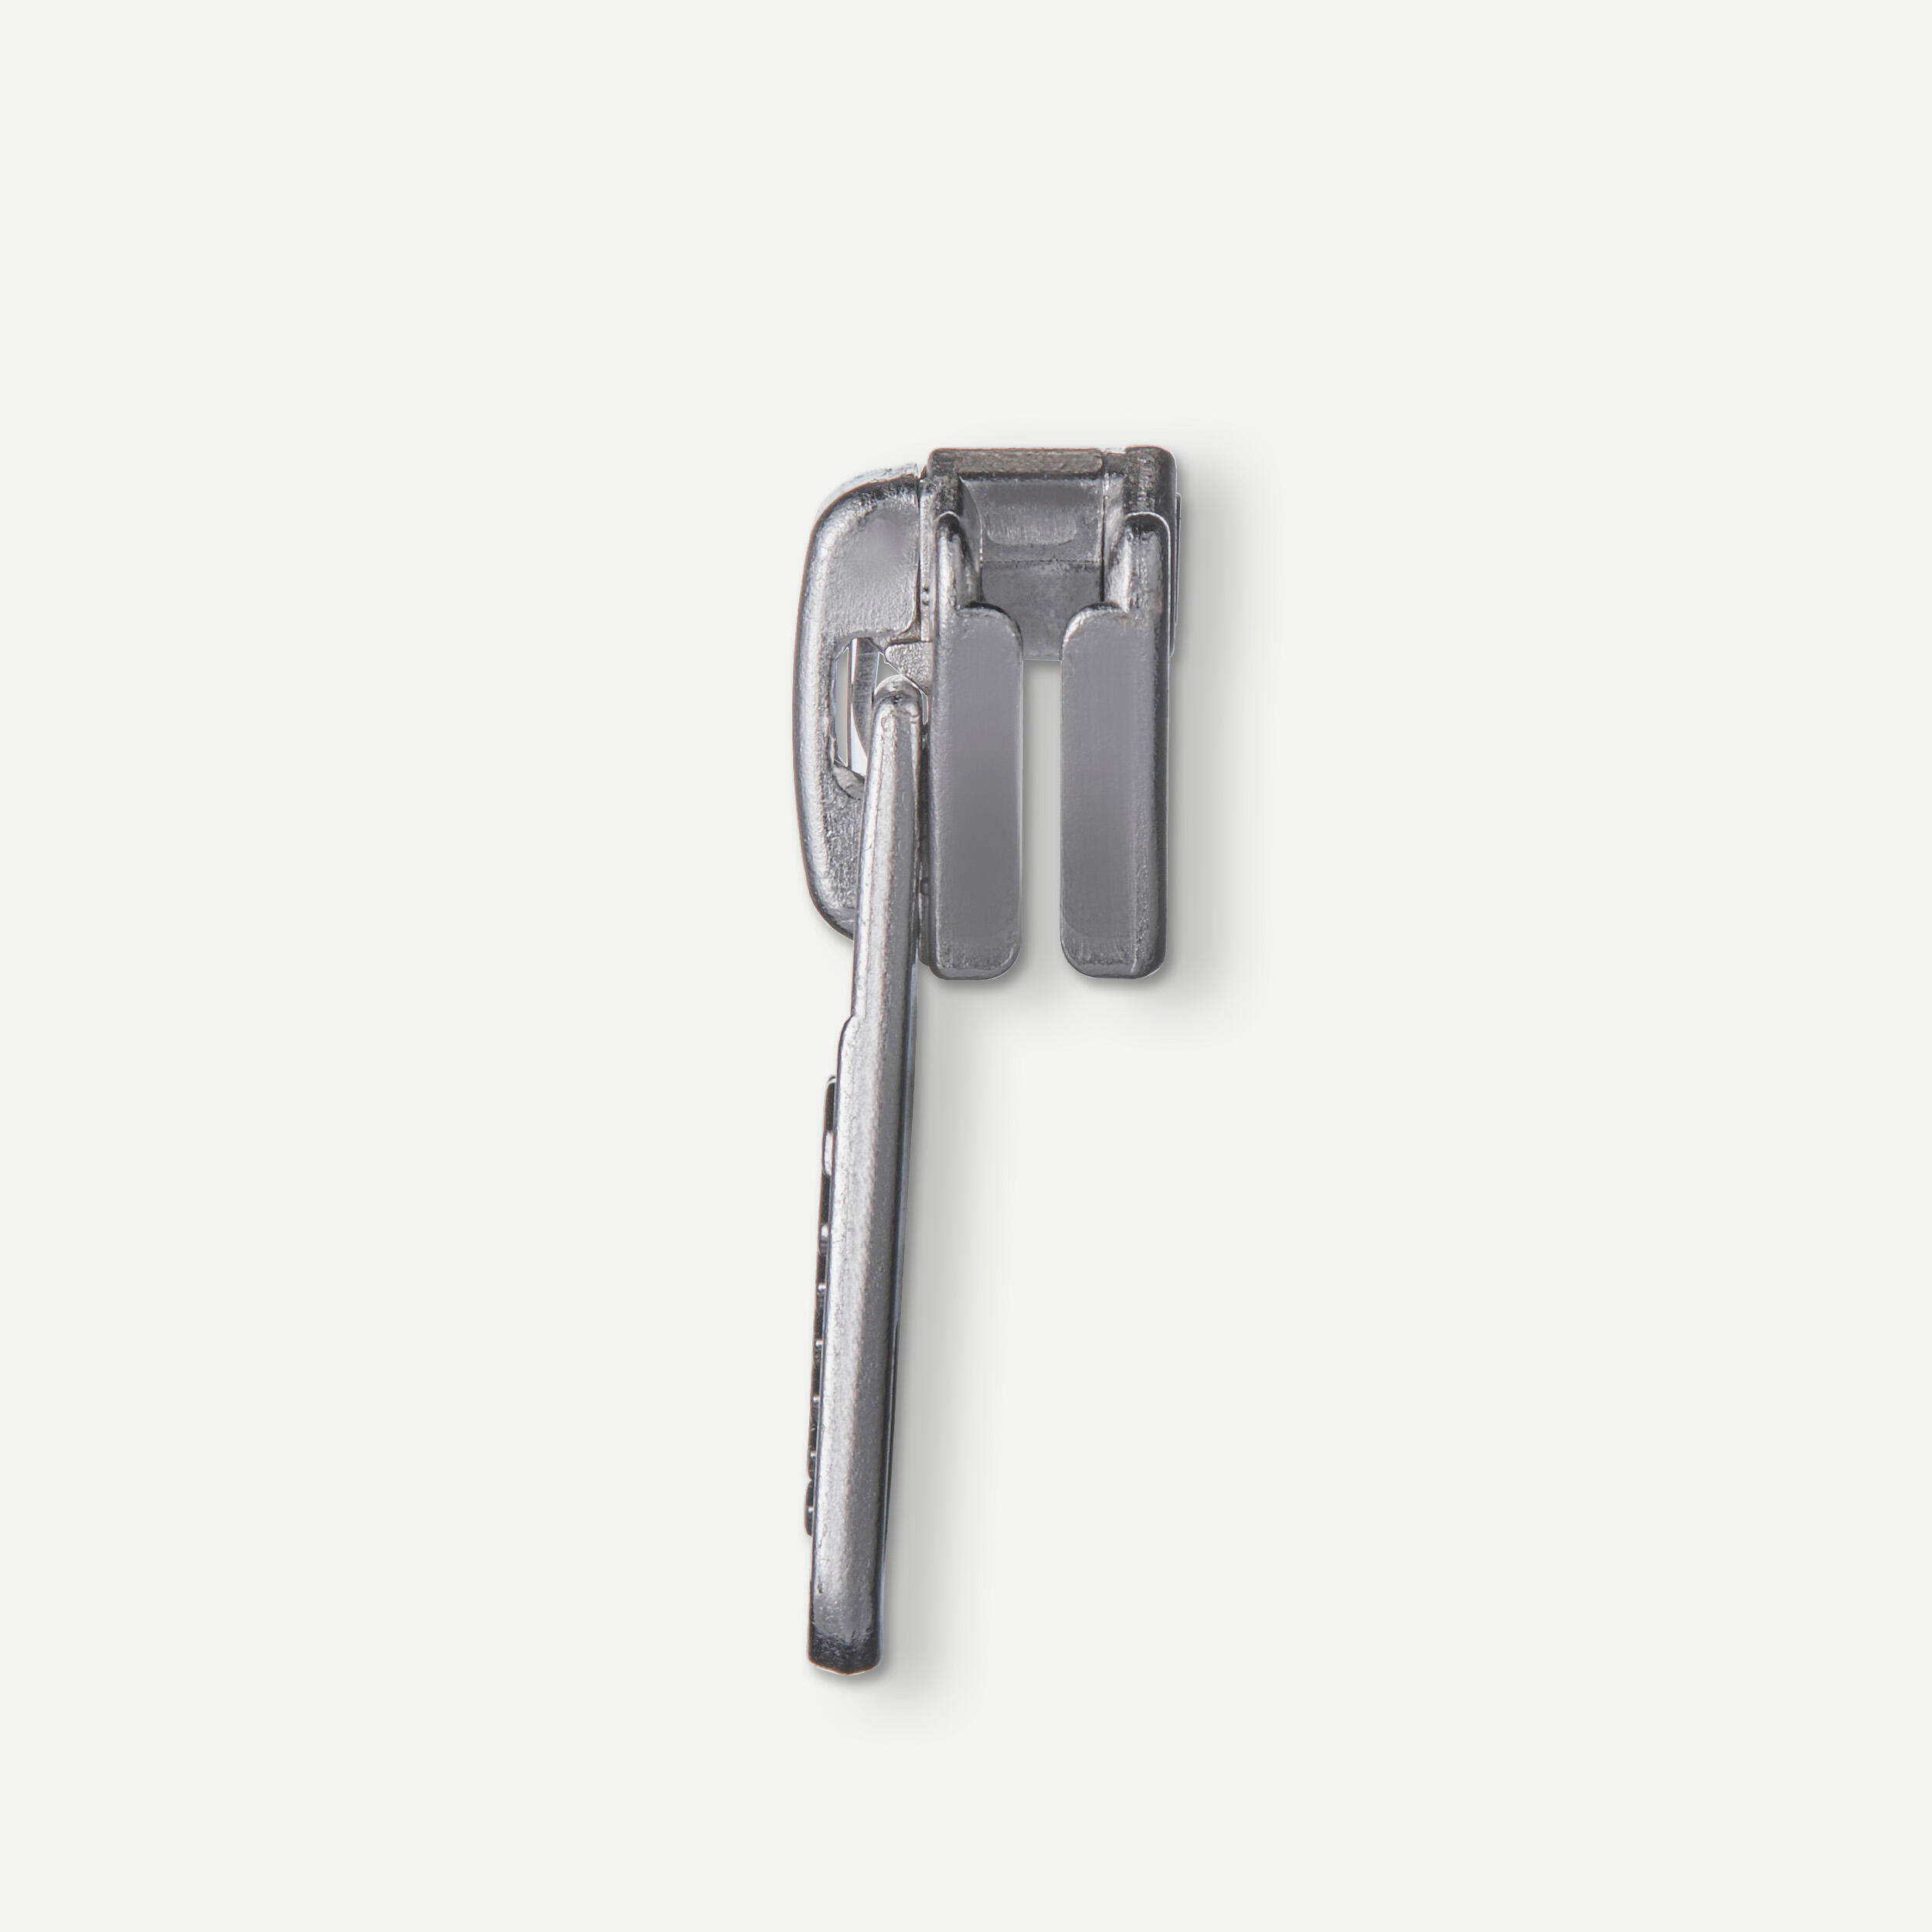 Repairable self-locking slider for 6mm plastic zip 4/5